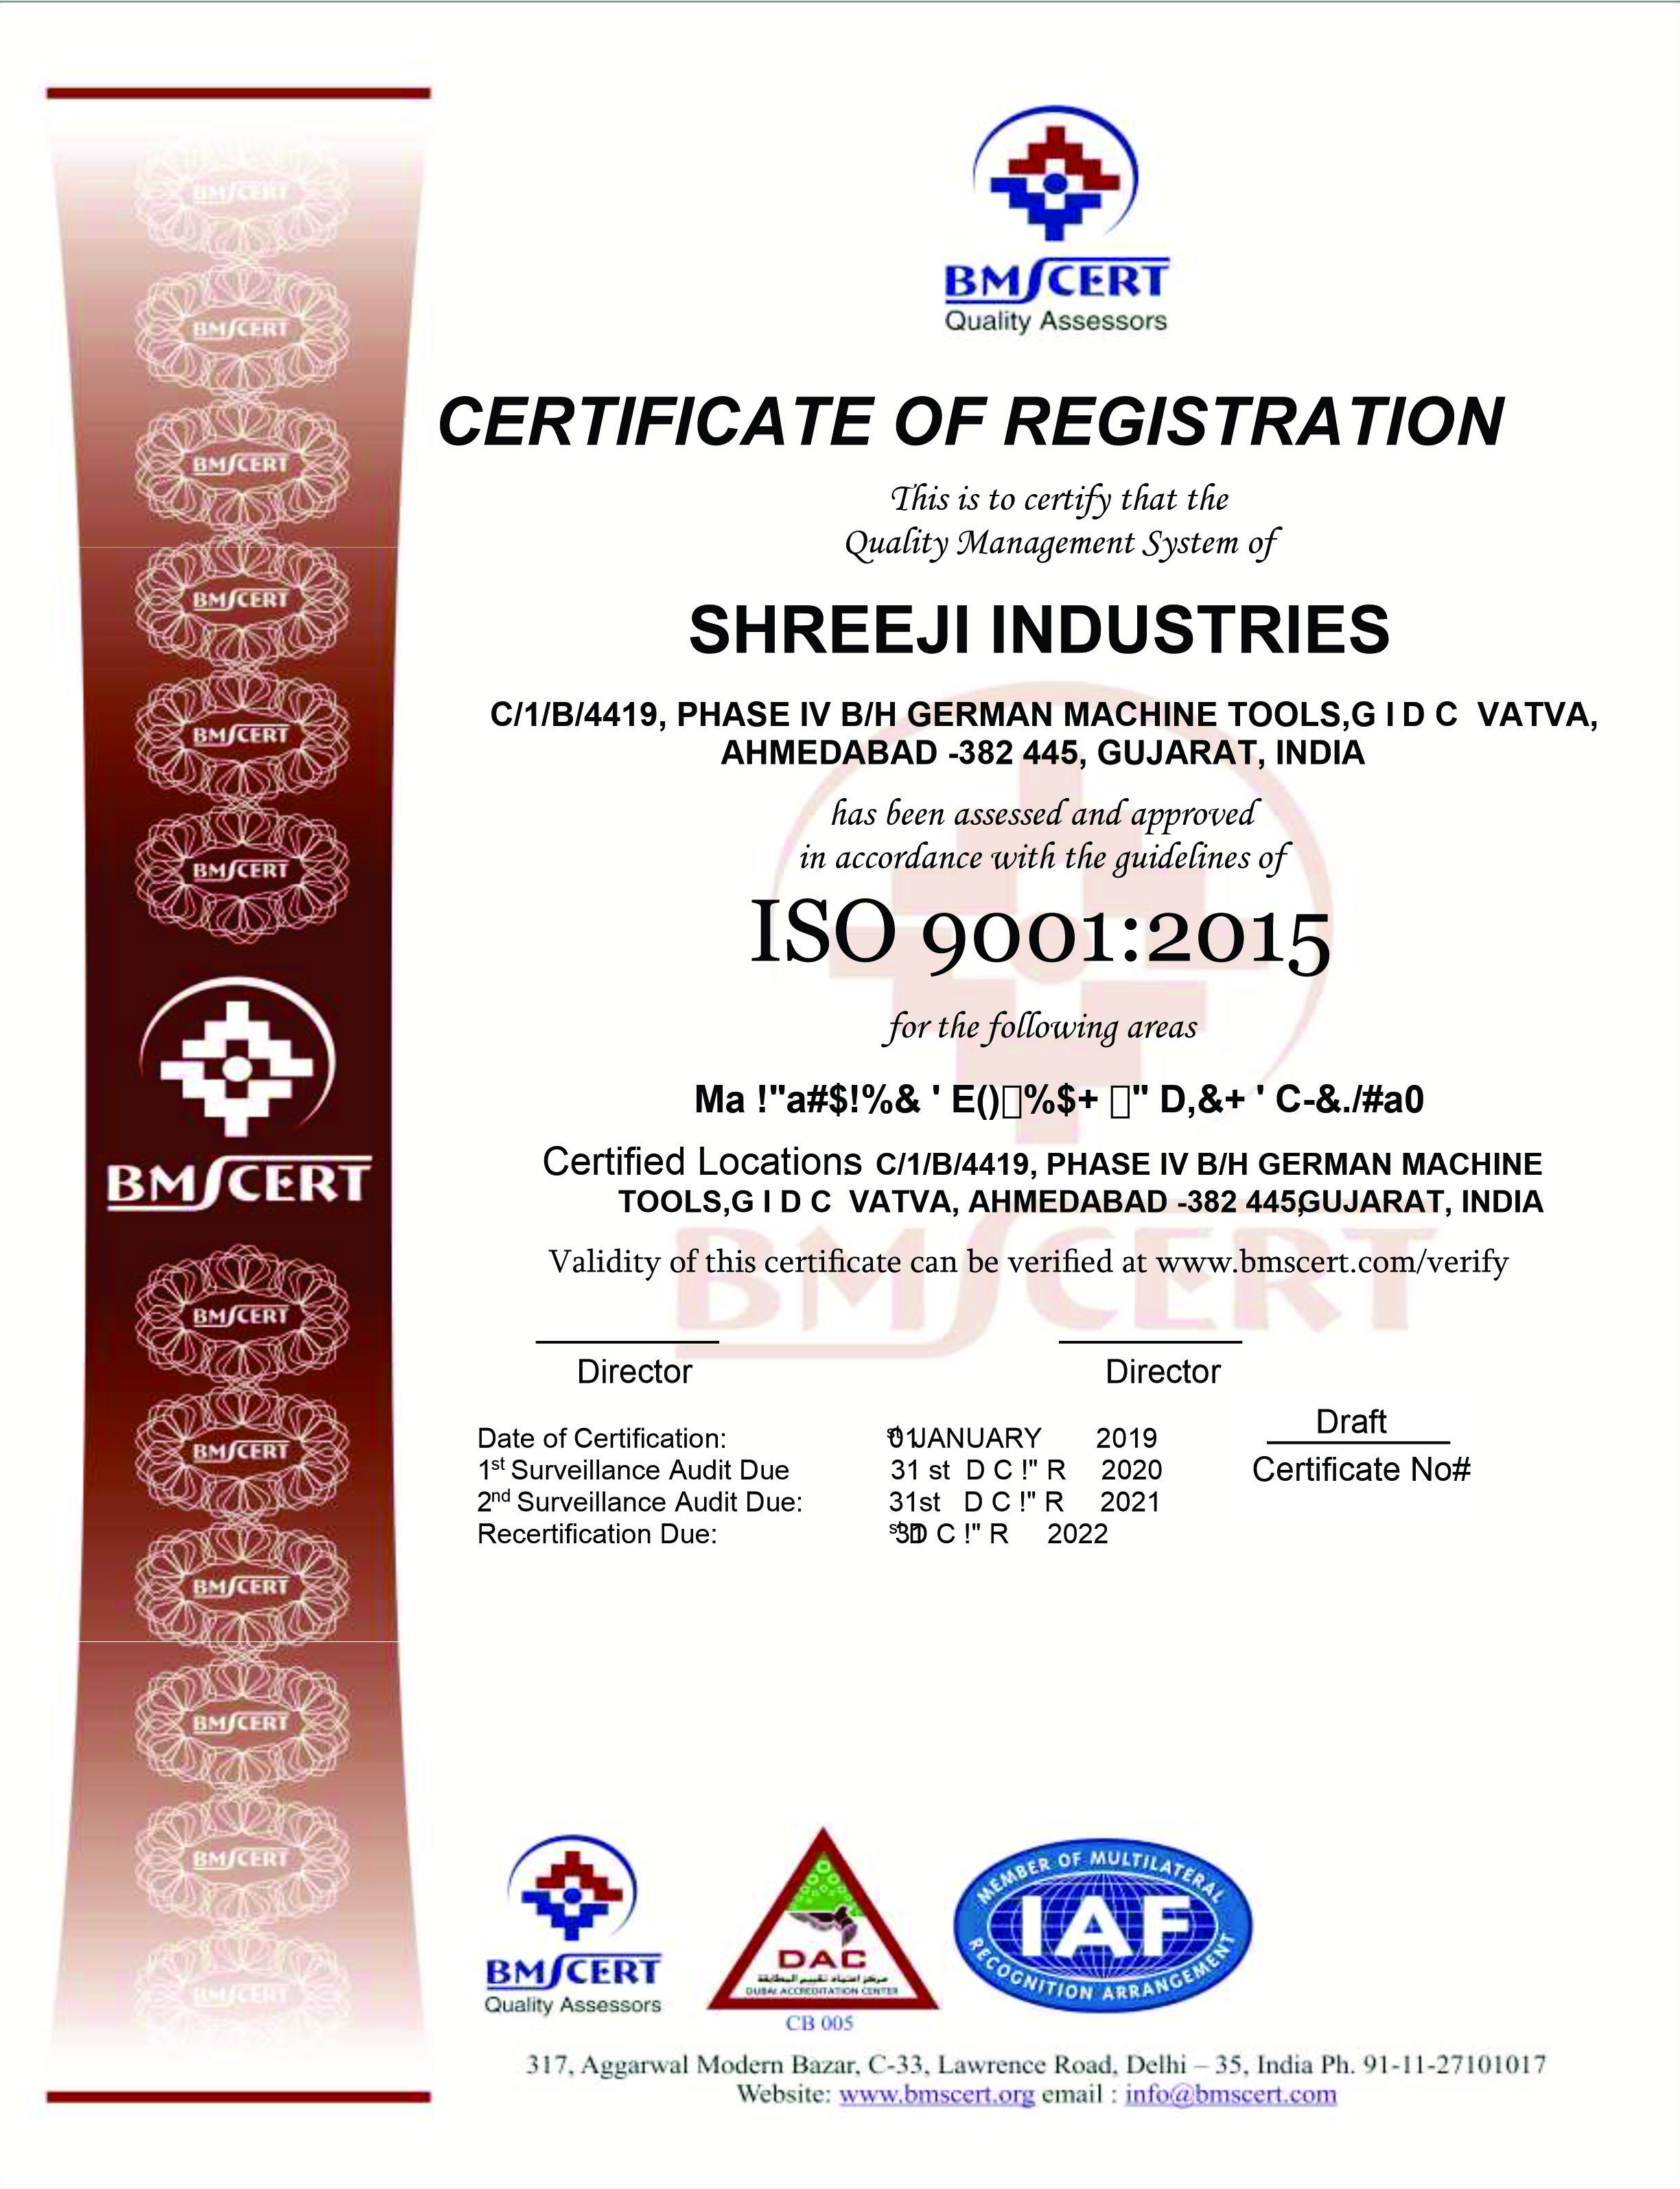 I.S.O Certification